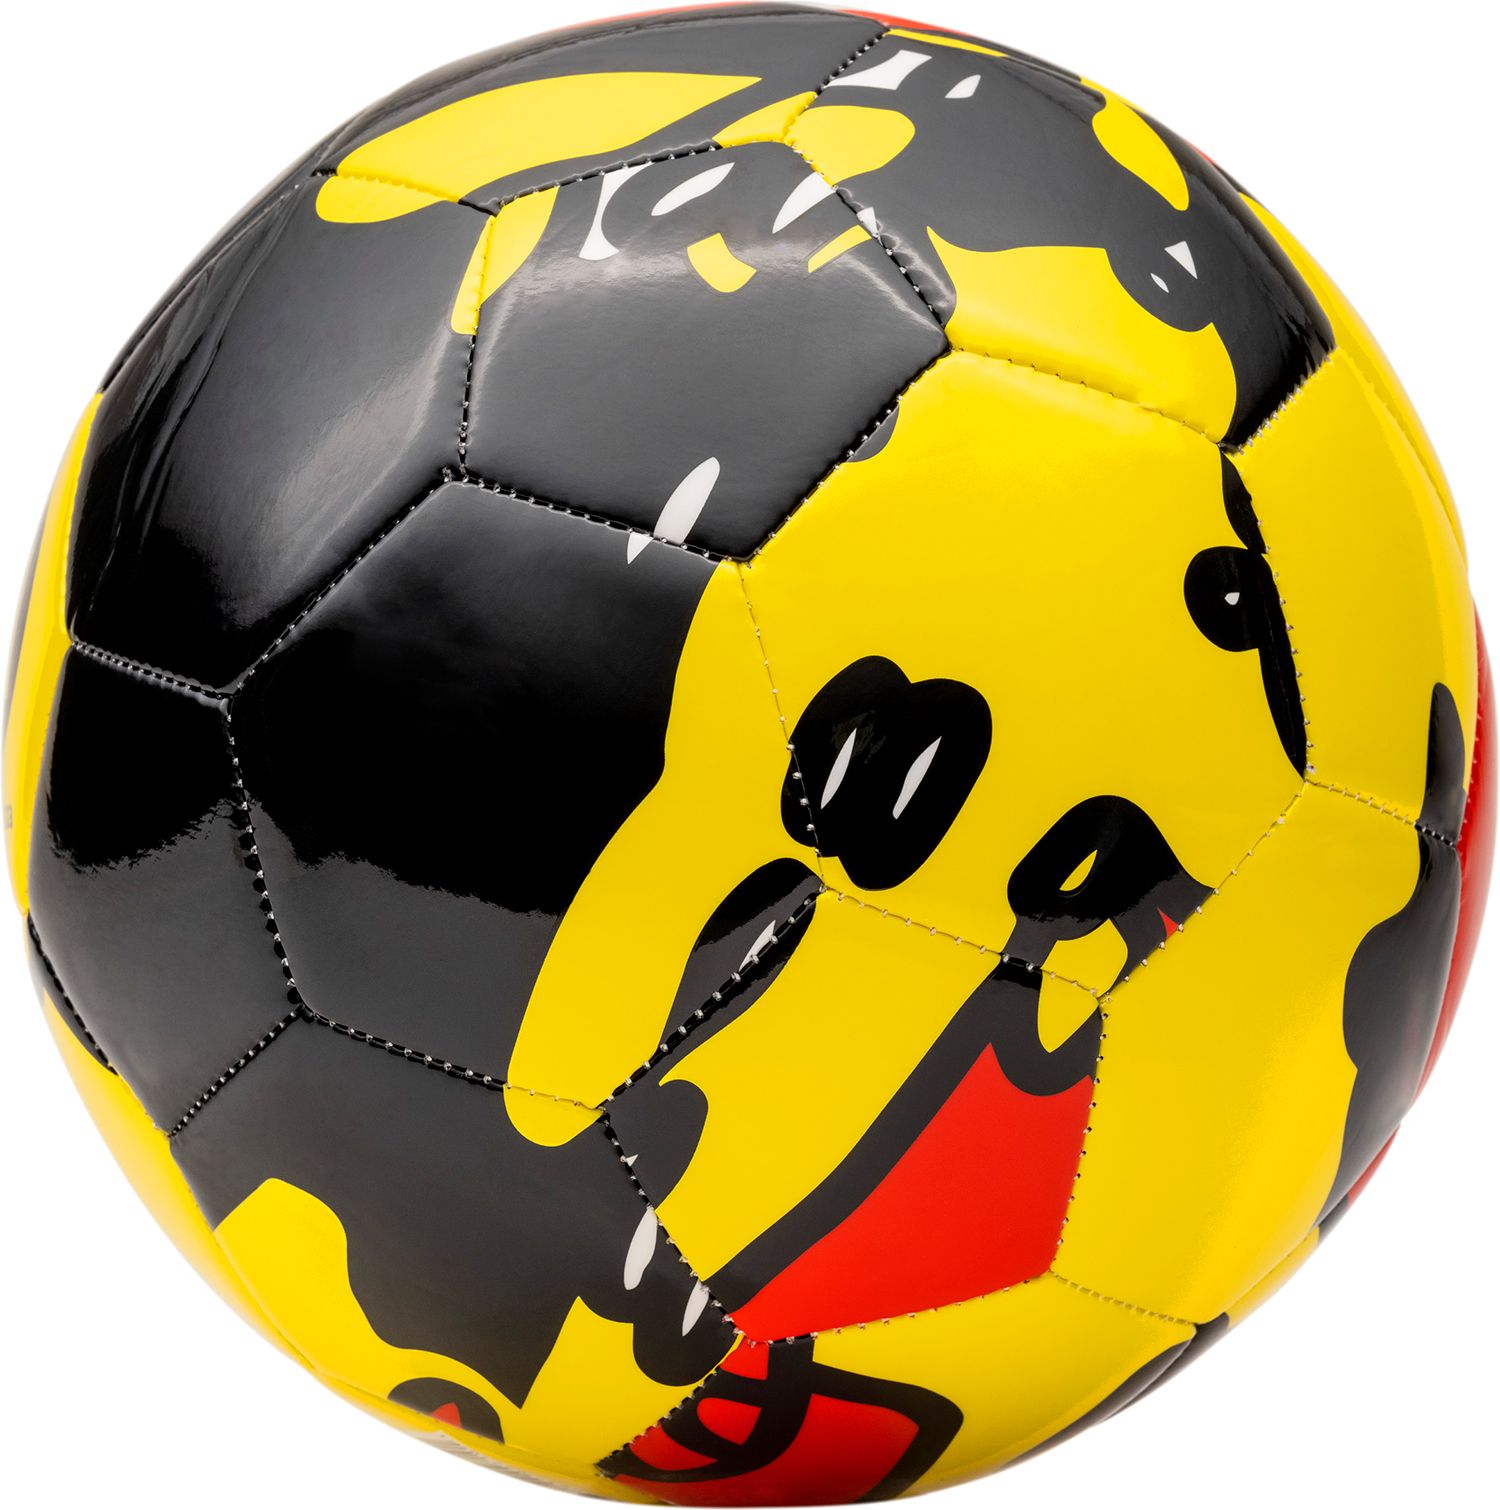 round21 Passport Series Tribute to Germany Soccer Ball